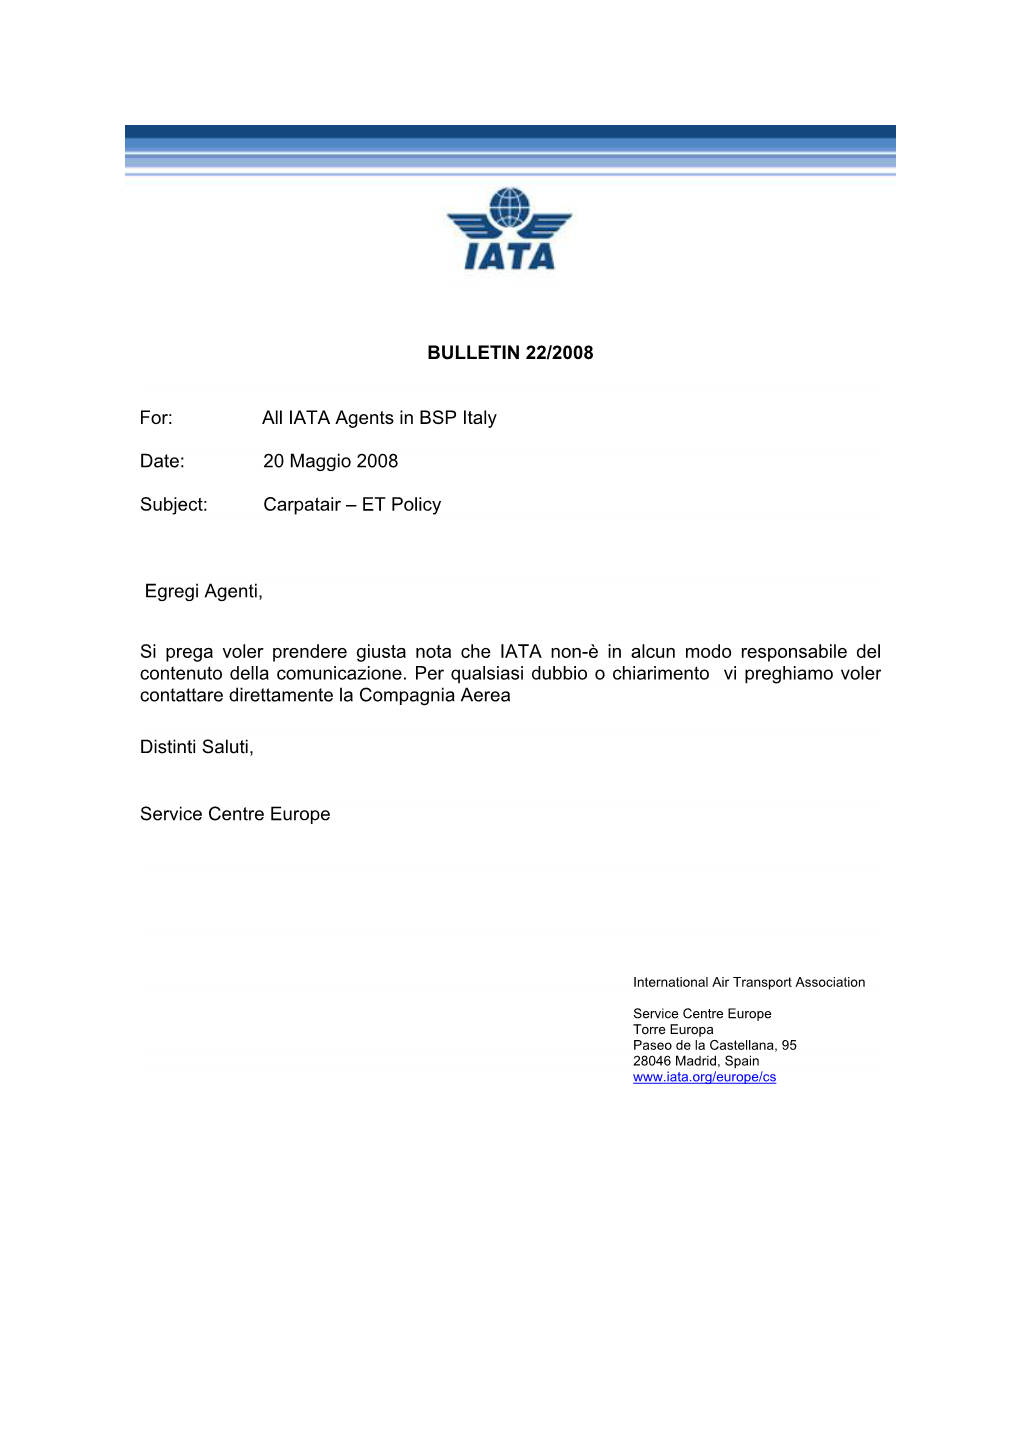 IATA Agents in BSP Italy Date: 20 Maggio 2008 Subject: Carpatair